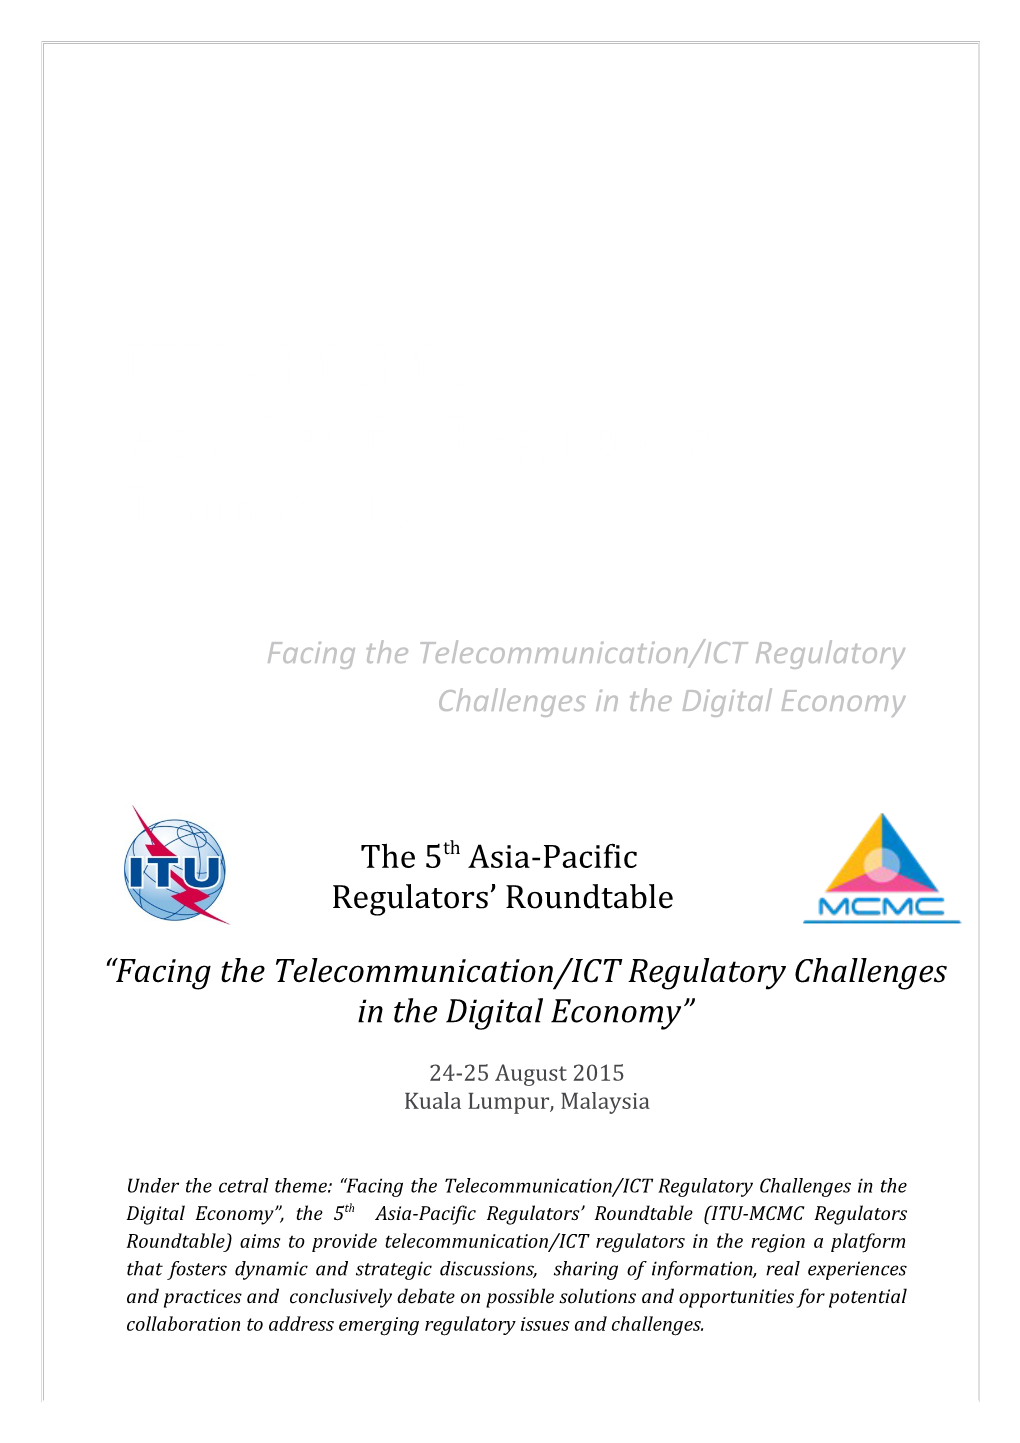 ITU - MCMC Asia-Pacific Regulators Roundtable